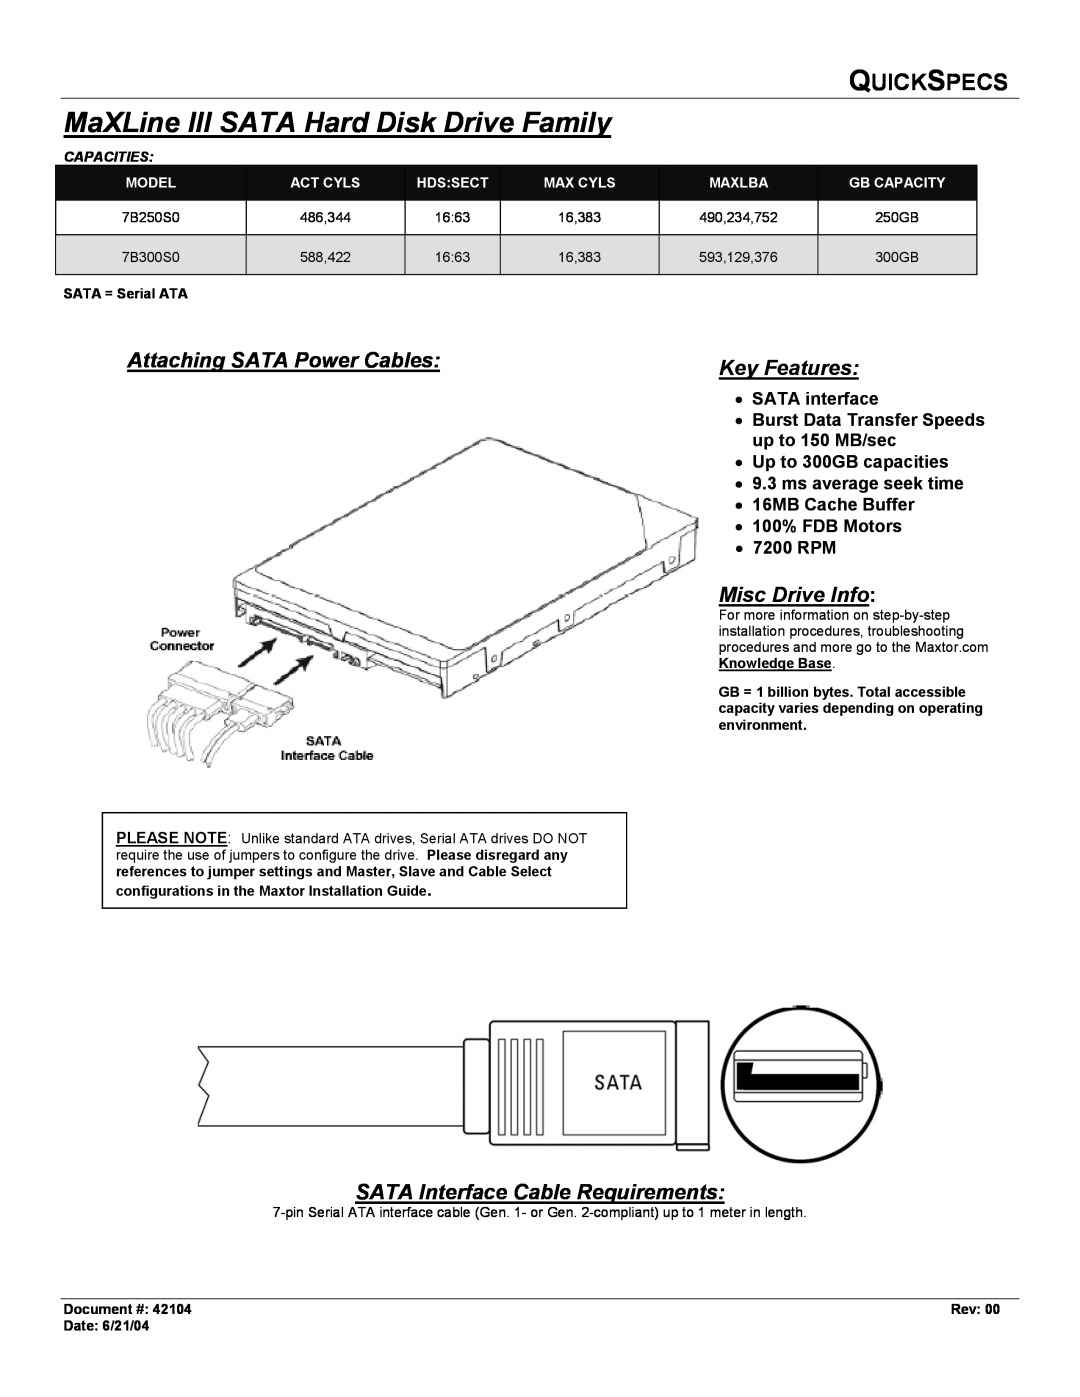 Maxtor 7B300S0 manual MaXLine III SATA Hard Disk Drive Family, Quickspecs, Attaching SATA Power Cables, Key Features 